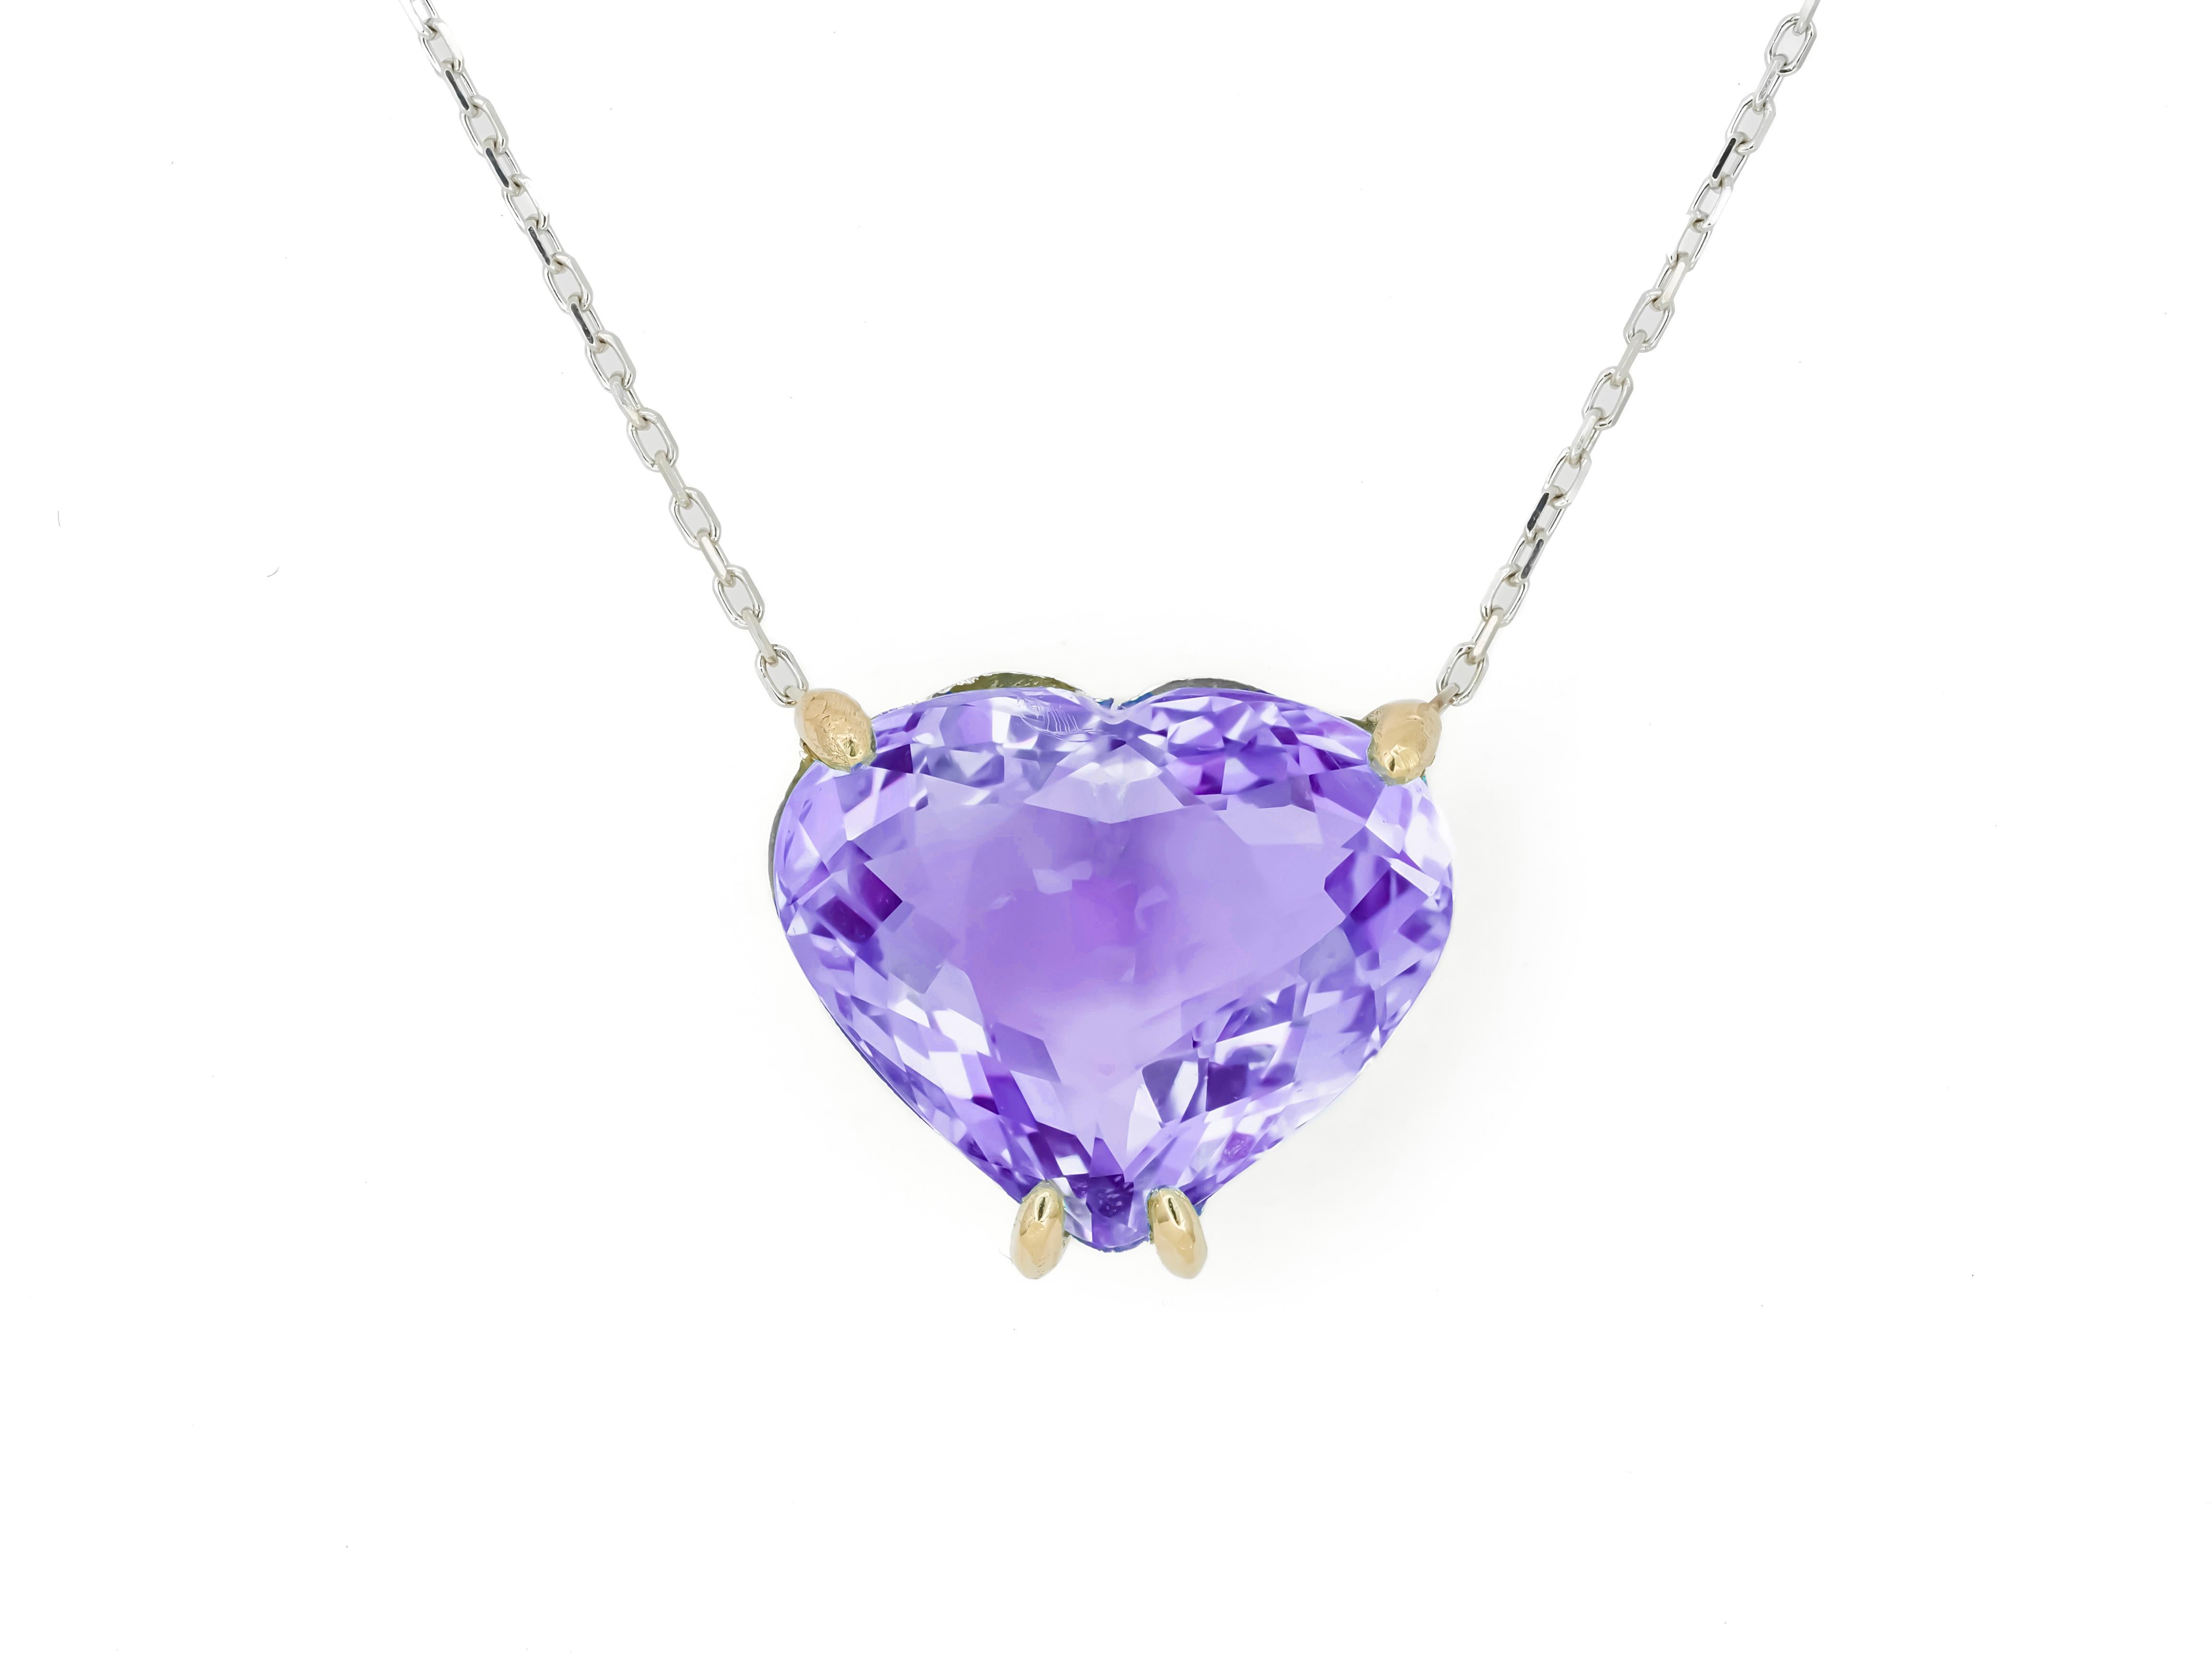 Women's Heart shaped amethyst pendant necklace in 14k gold.  For Sale